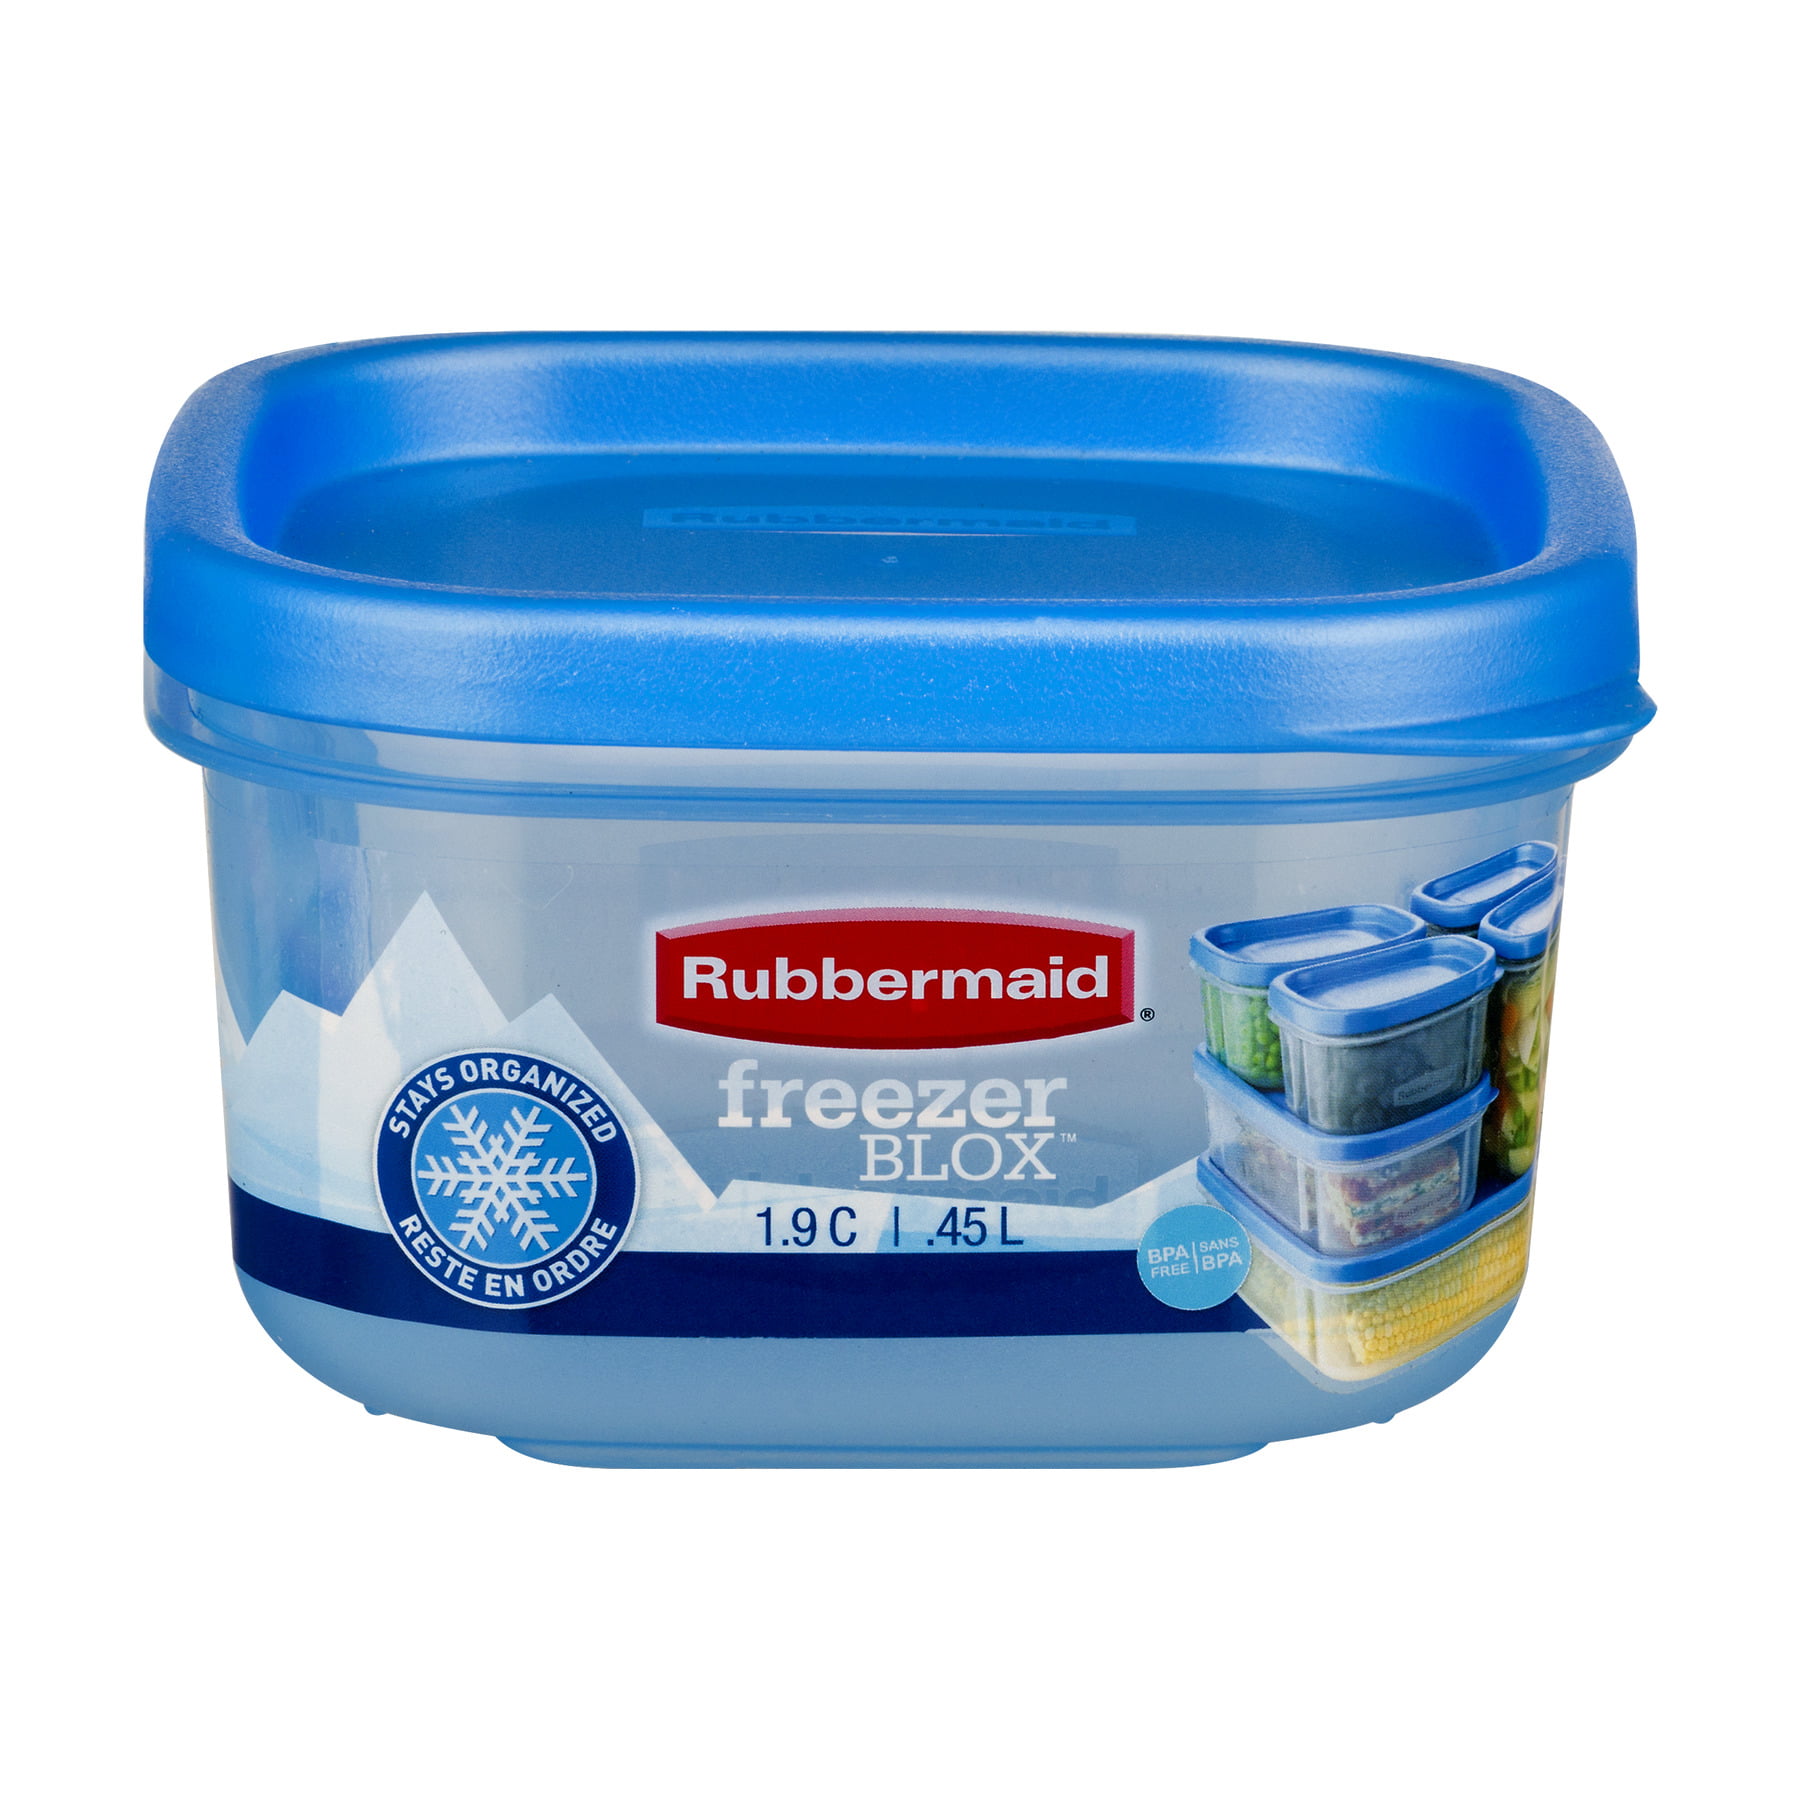 Rubbermaid Freezer Blox 1 9 Cup Storage Container Walmart Com